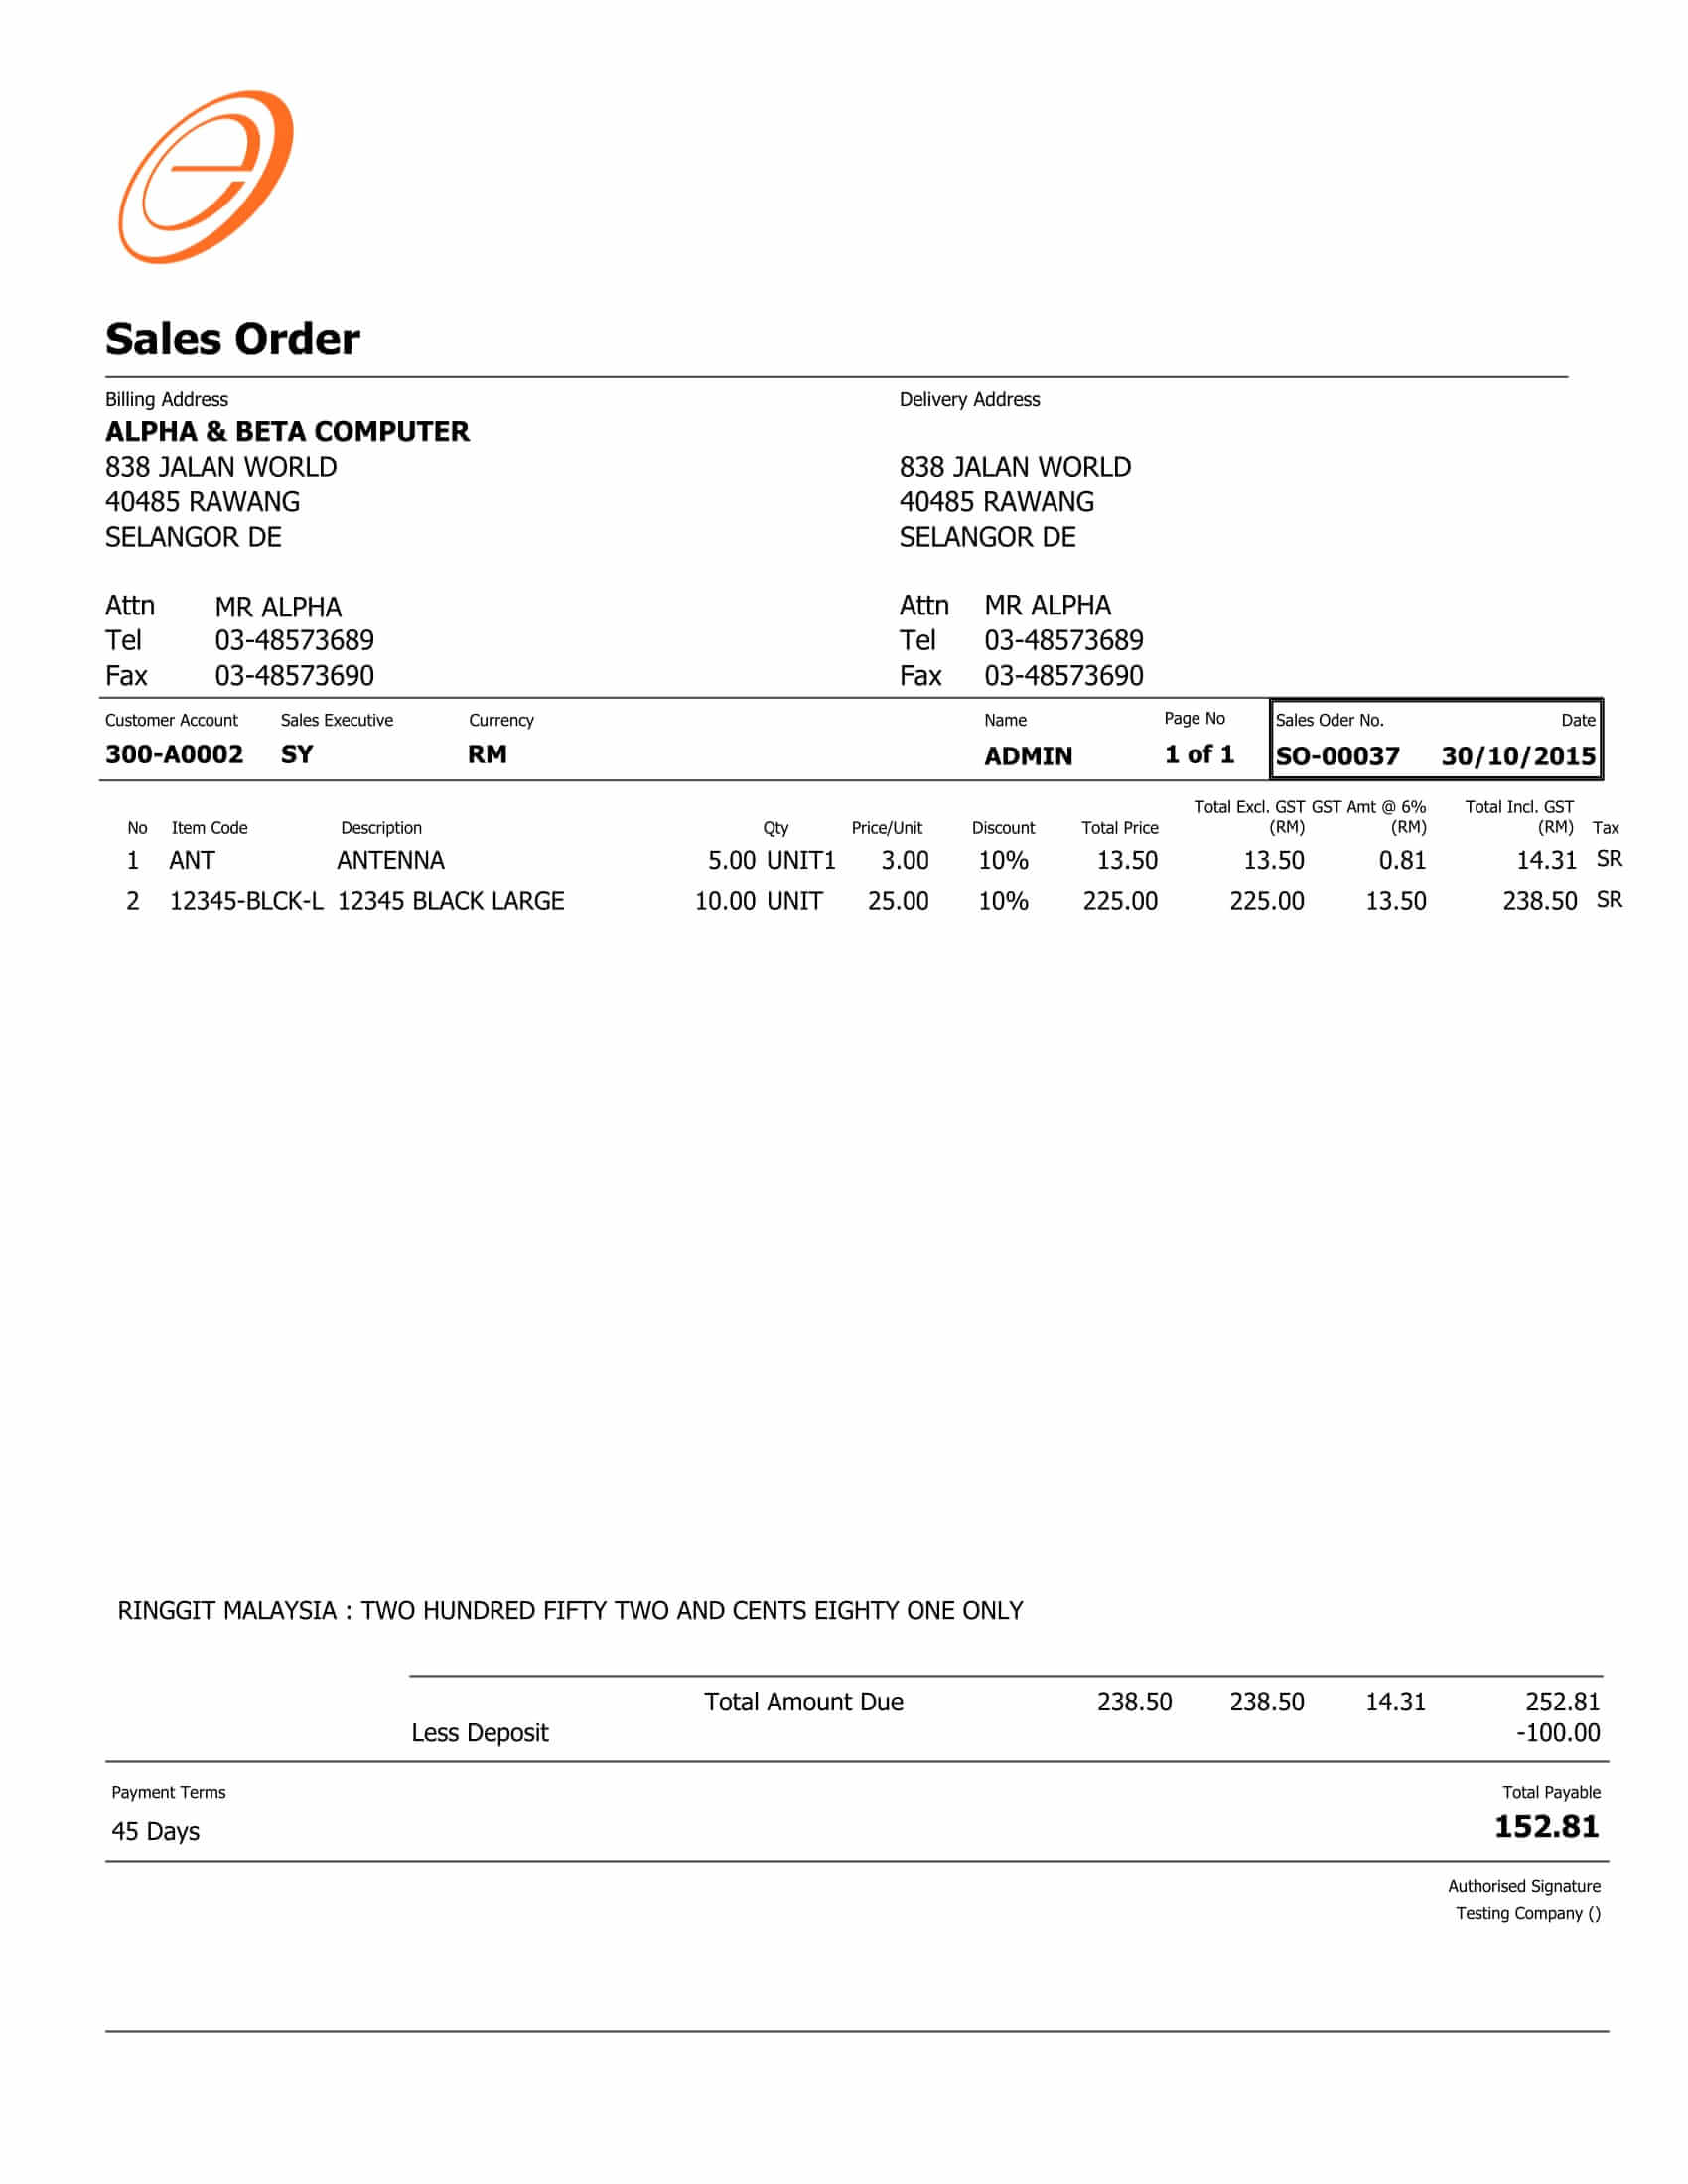 Sales Order 1 GST Deposit